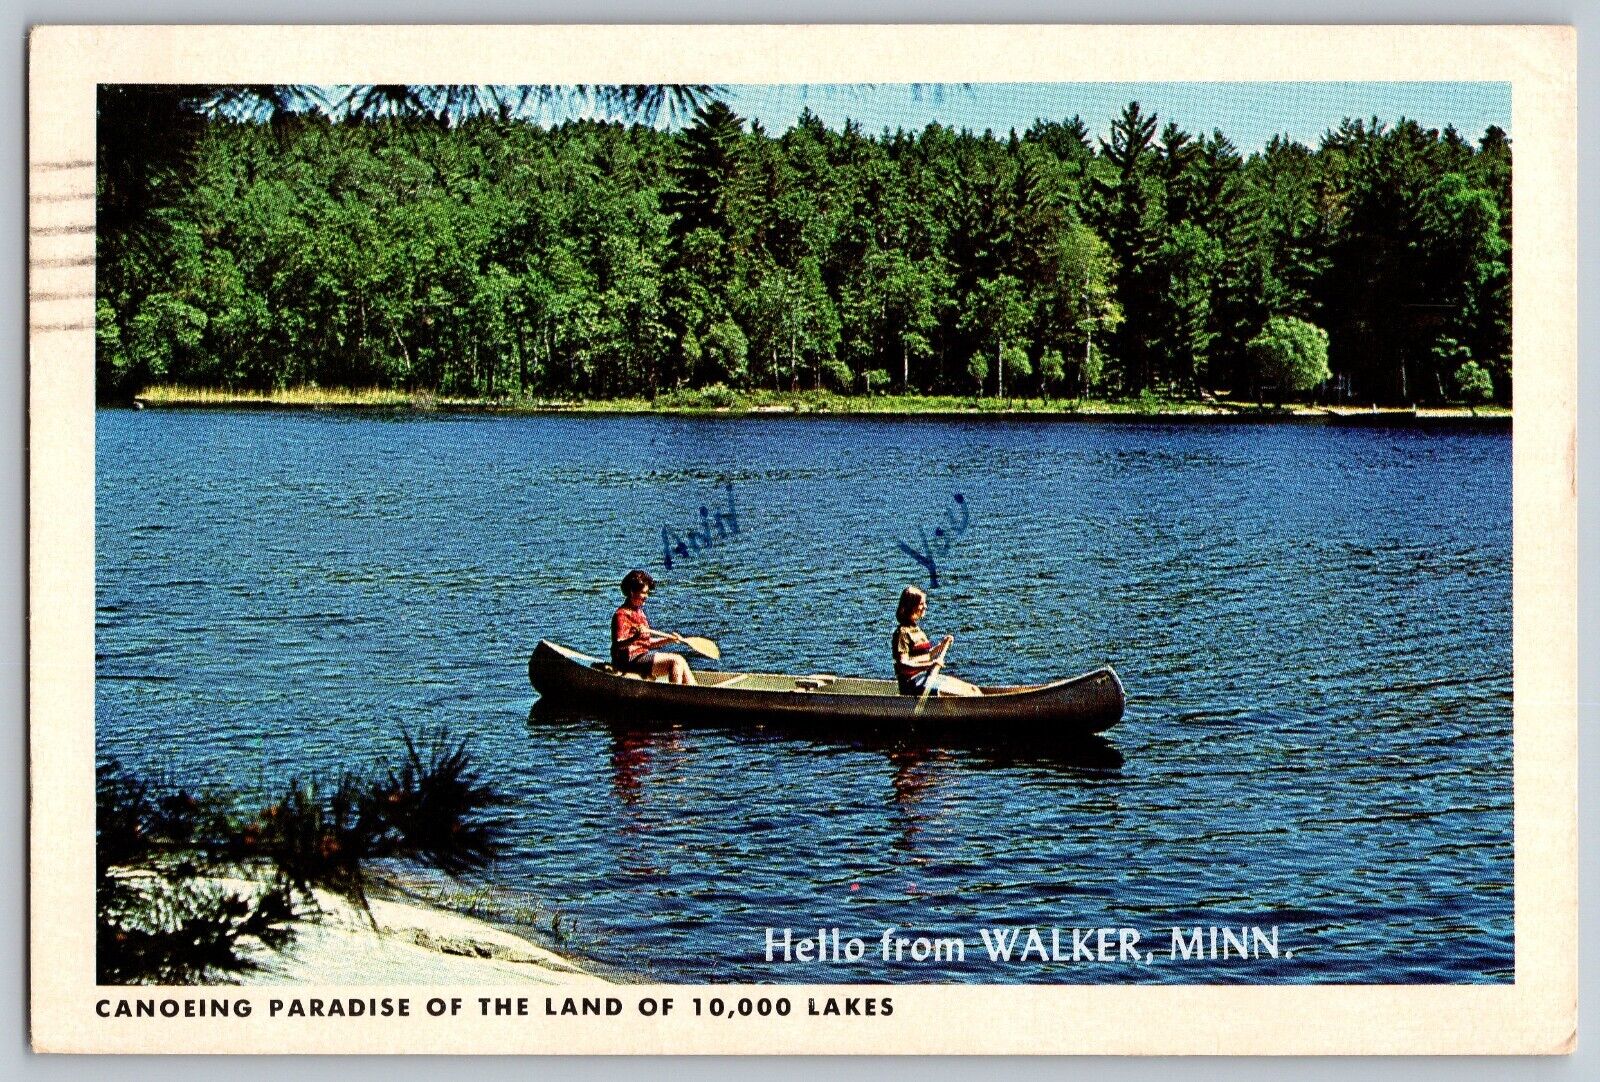 Walker, Minnesota MN - Canoeing Paradise of 10,000 Lakes - Vintage Postcard 4x6